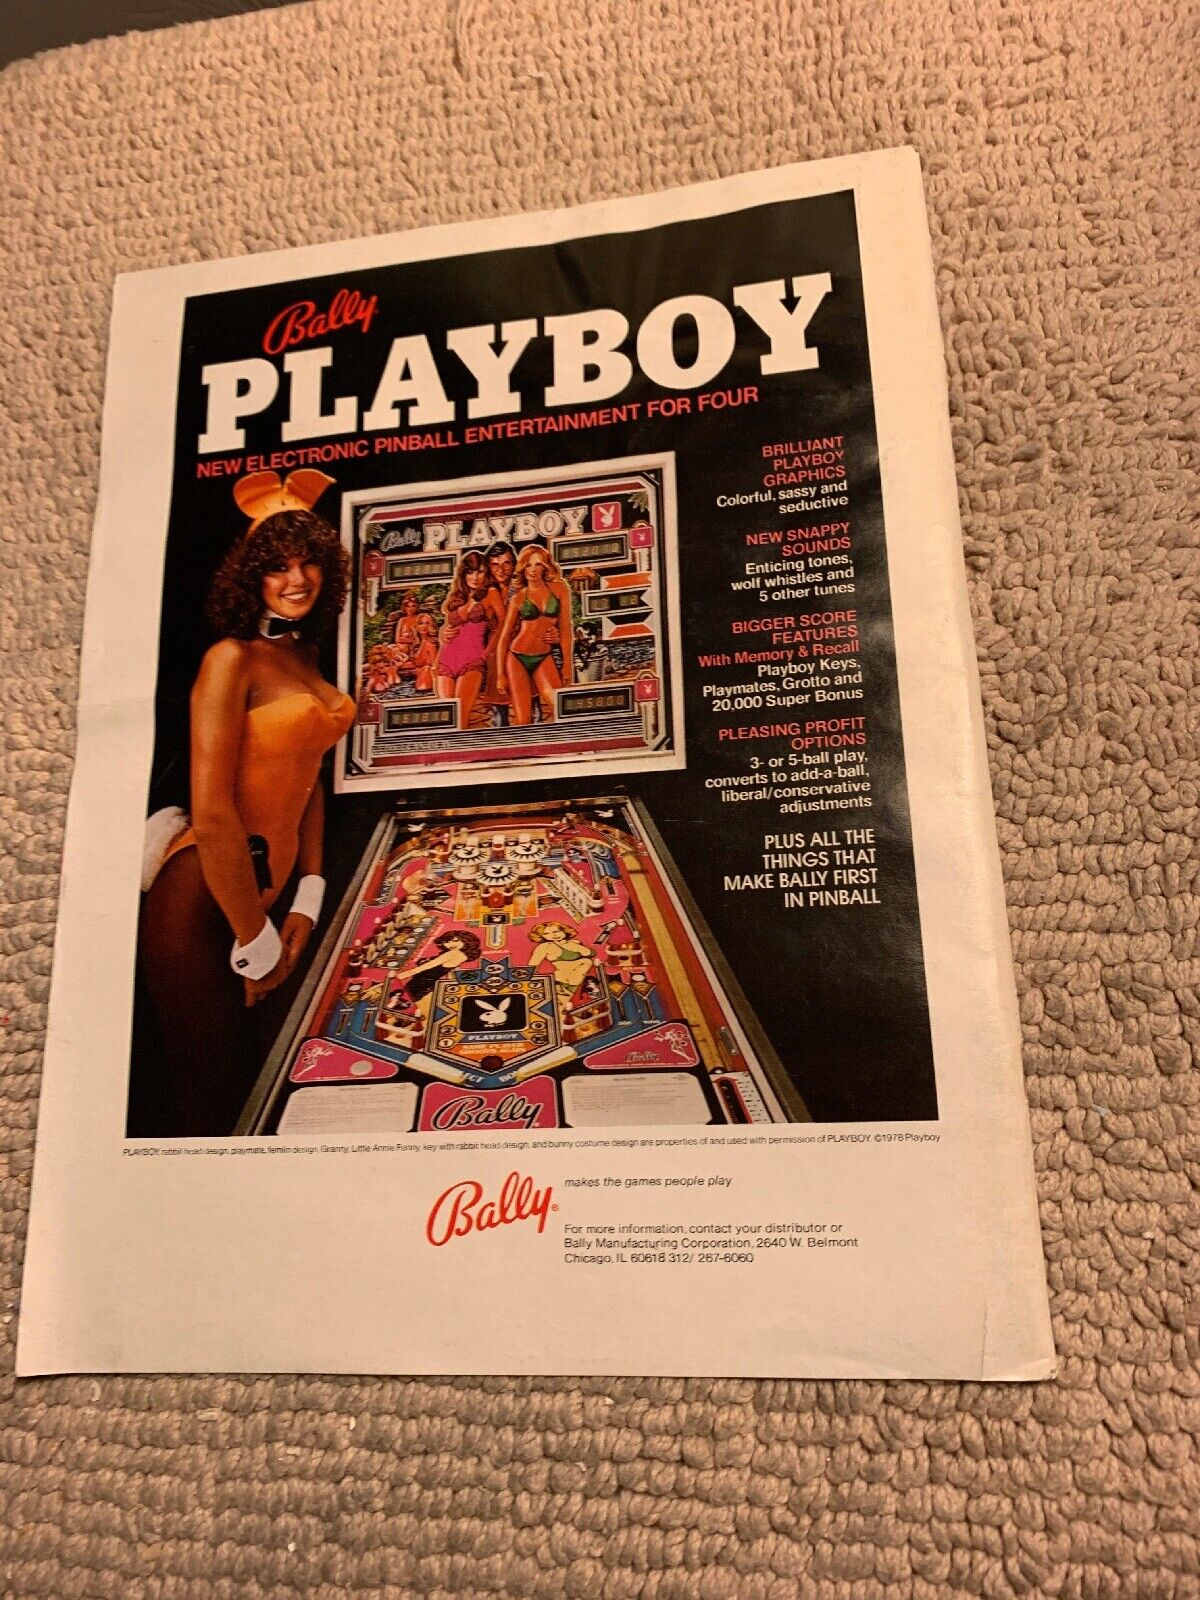 11-8 1/4” Playboy Bally Pinball Star Fire Exidy arcade game FLYER AD